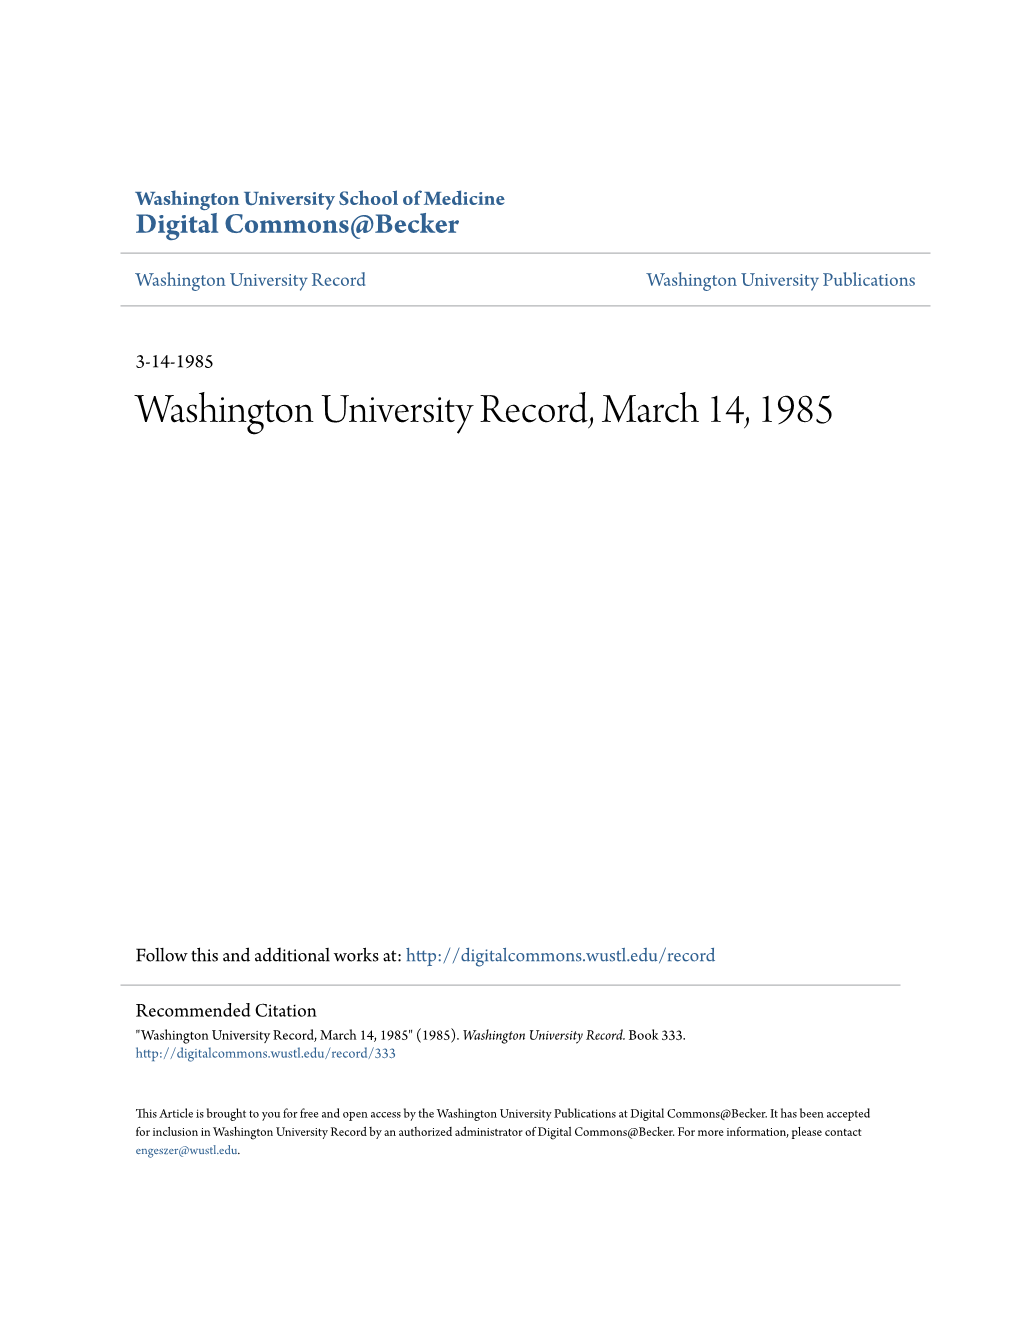 Washington University Record, March 14, 1985